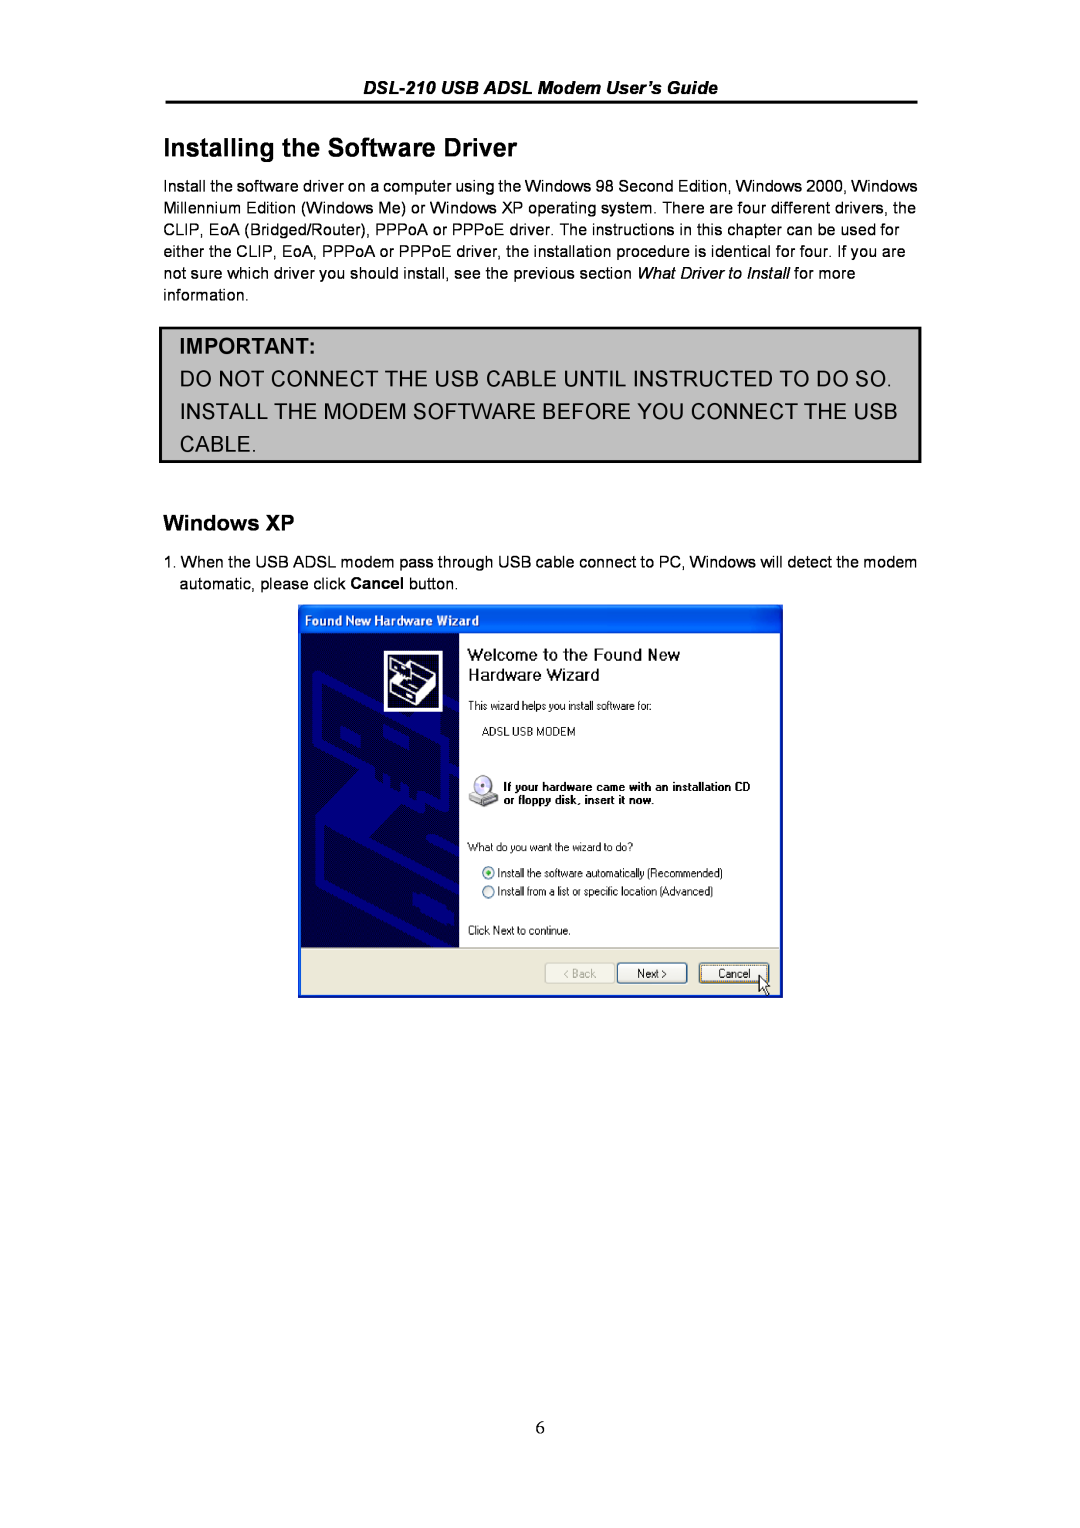 D-Link manual Installing the Software Driver, Windows XP, DSL-210 USB ADSL Modem User’s Guide 